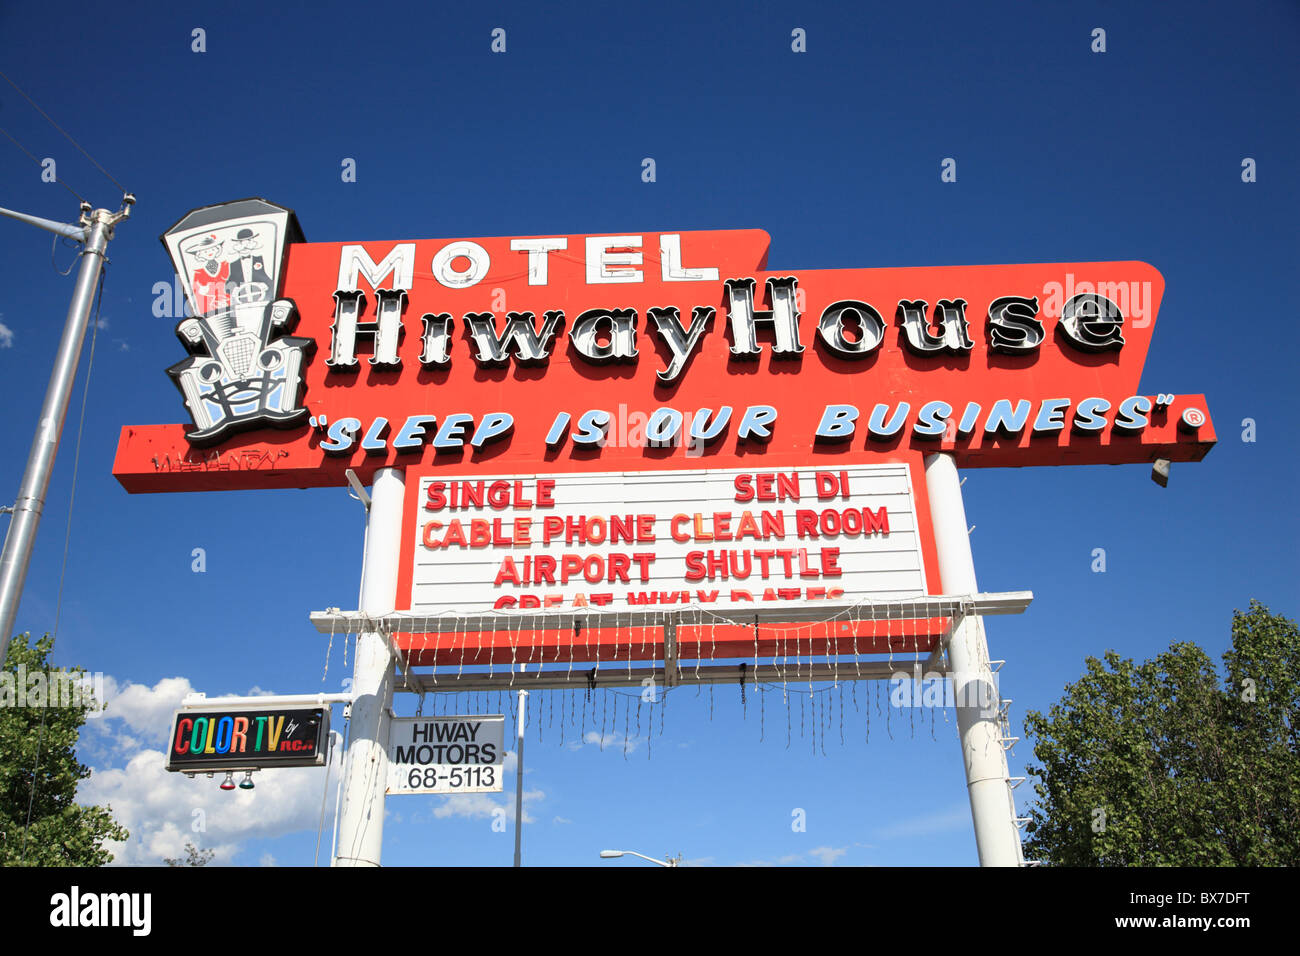 Hiway House Motel, Route 66, Albuquerque, New Mexico, USA Banque D'Images